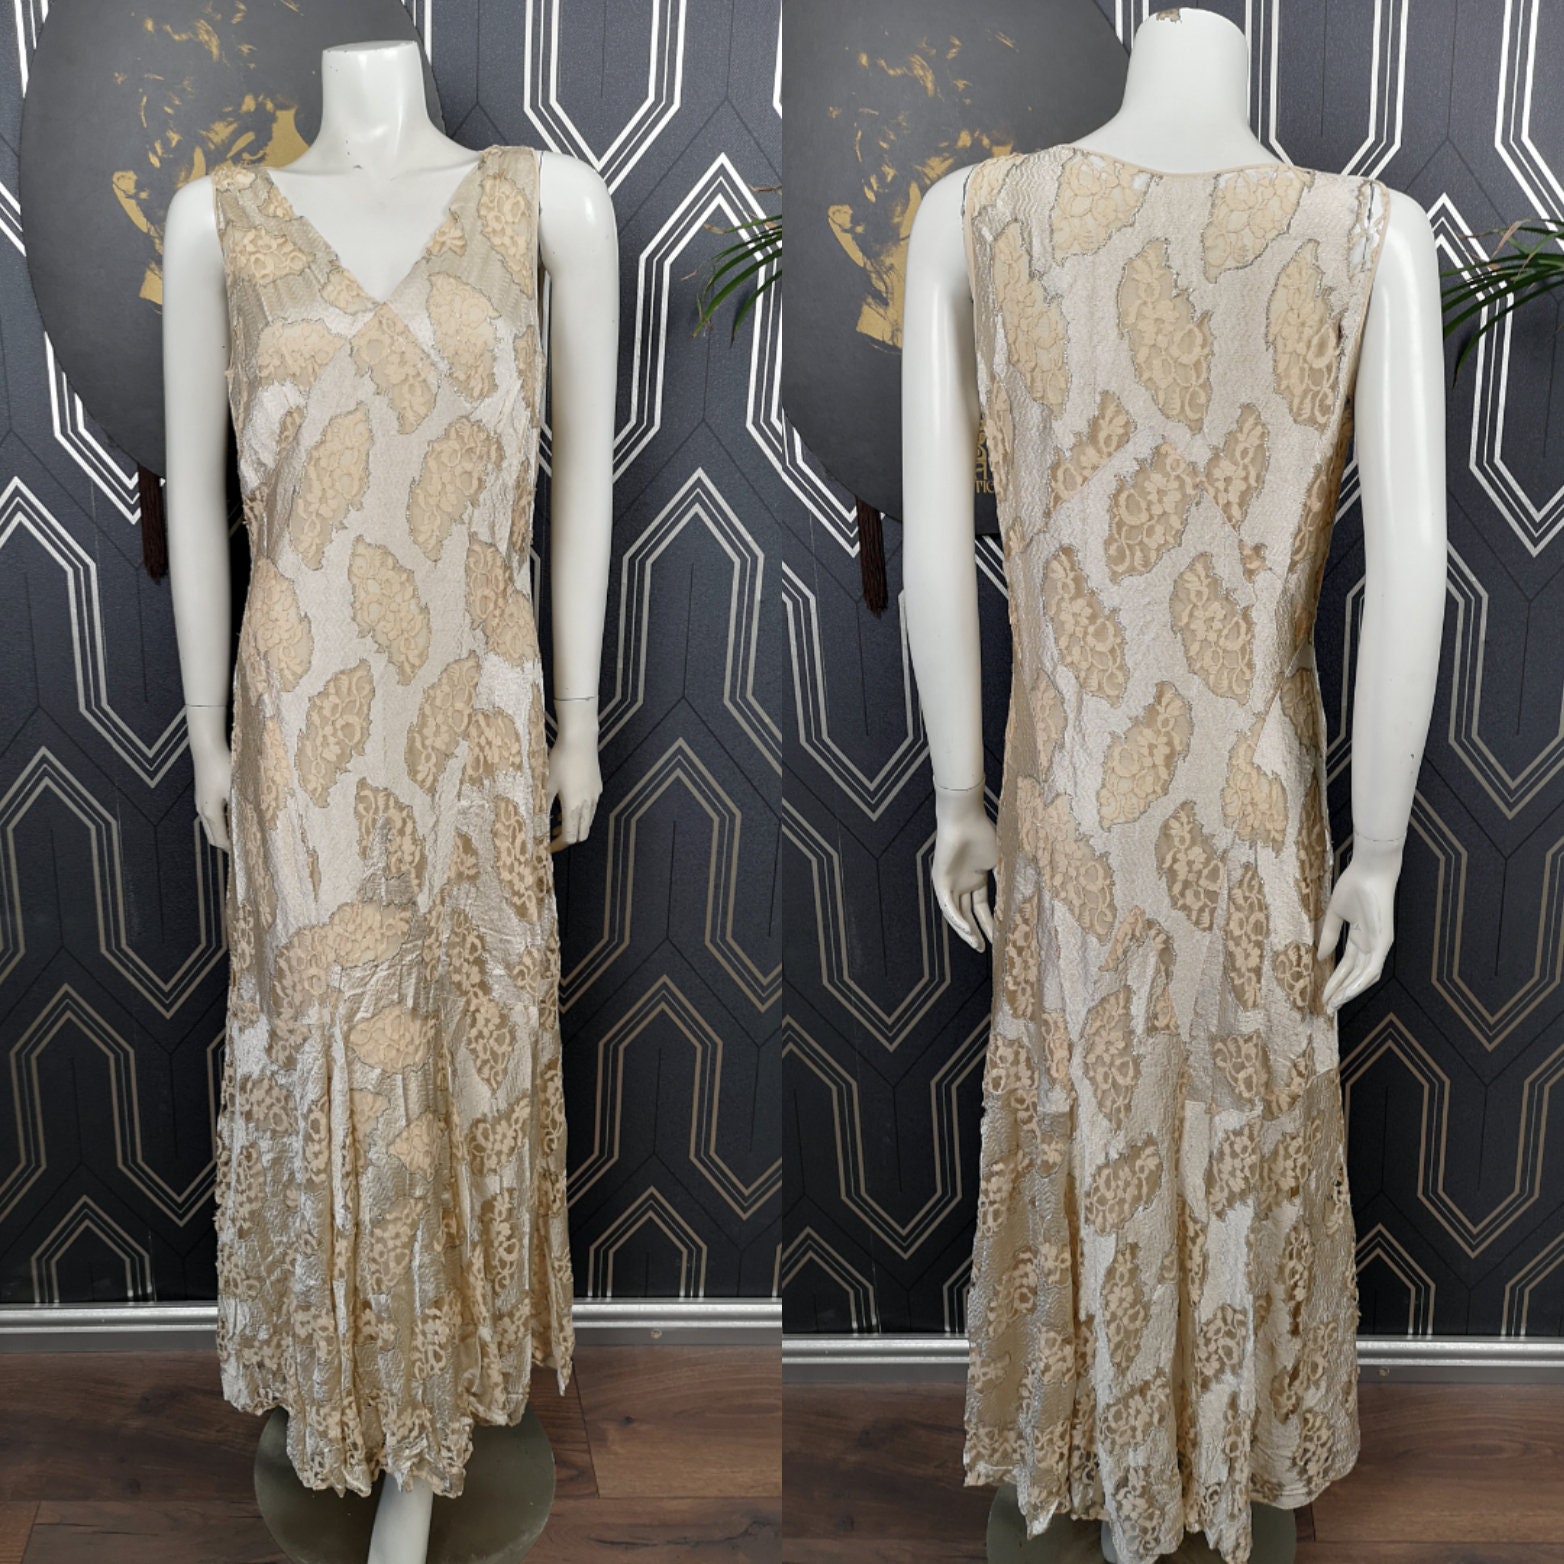 Original 1920's Long Cream Lace & Crepe Dress - Fair Condition - Only ...